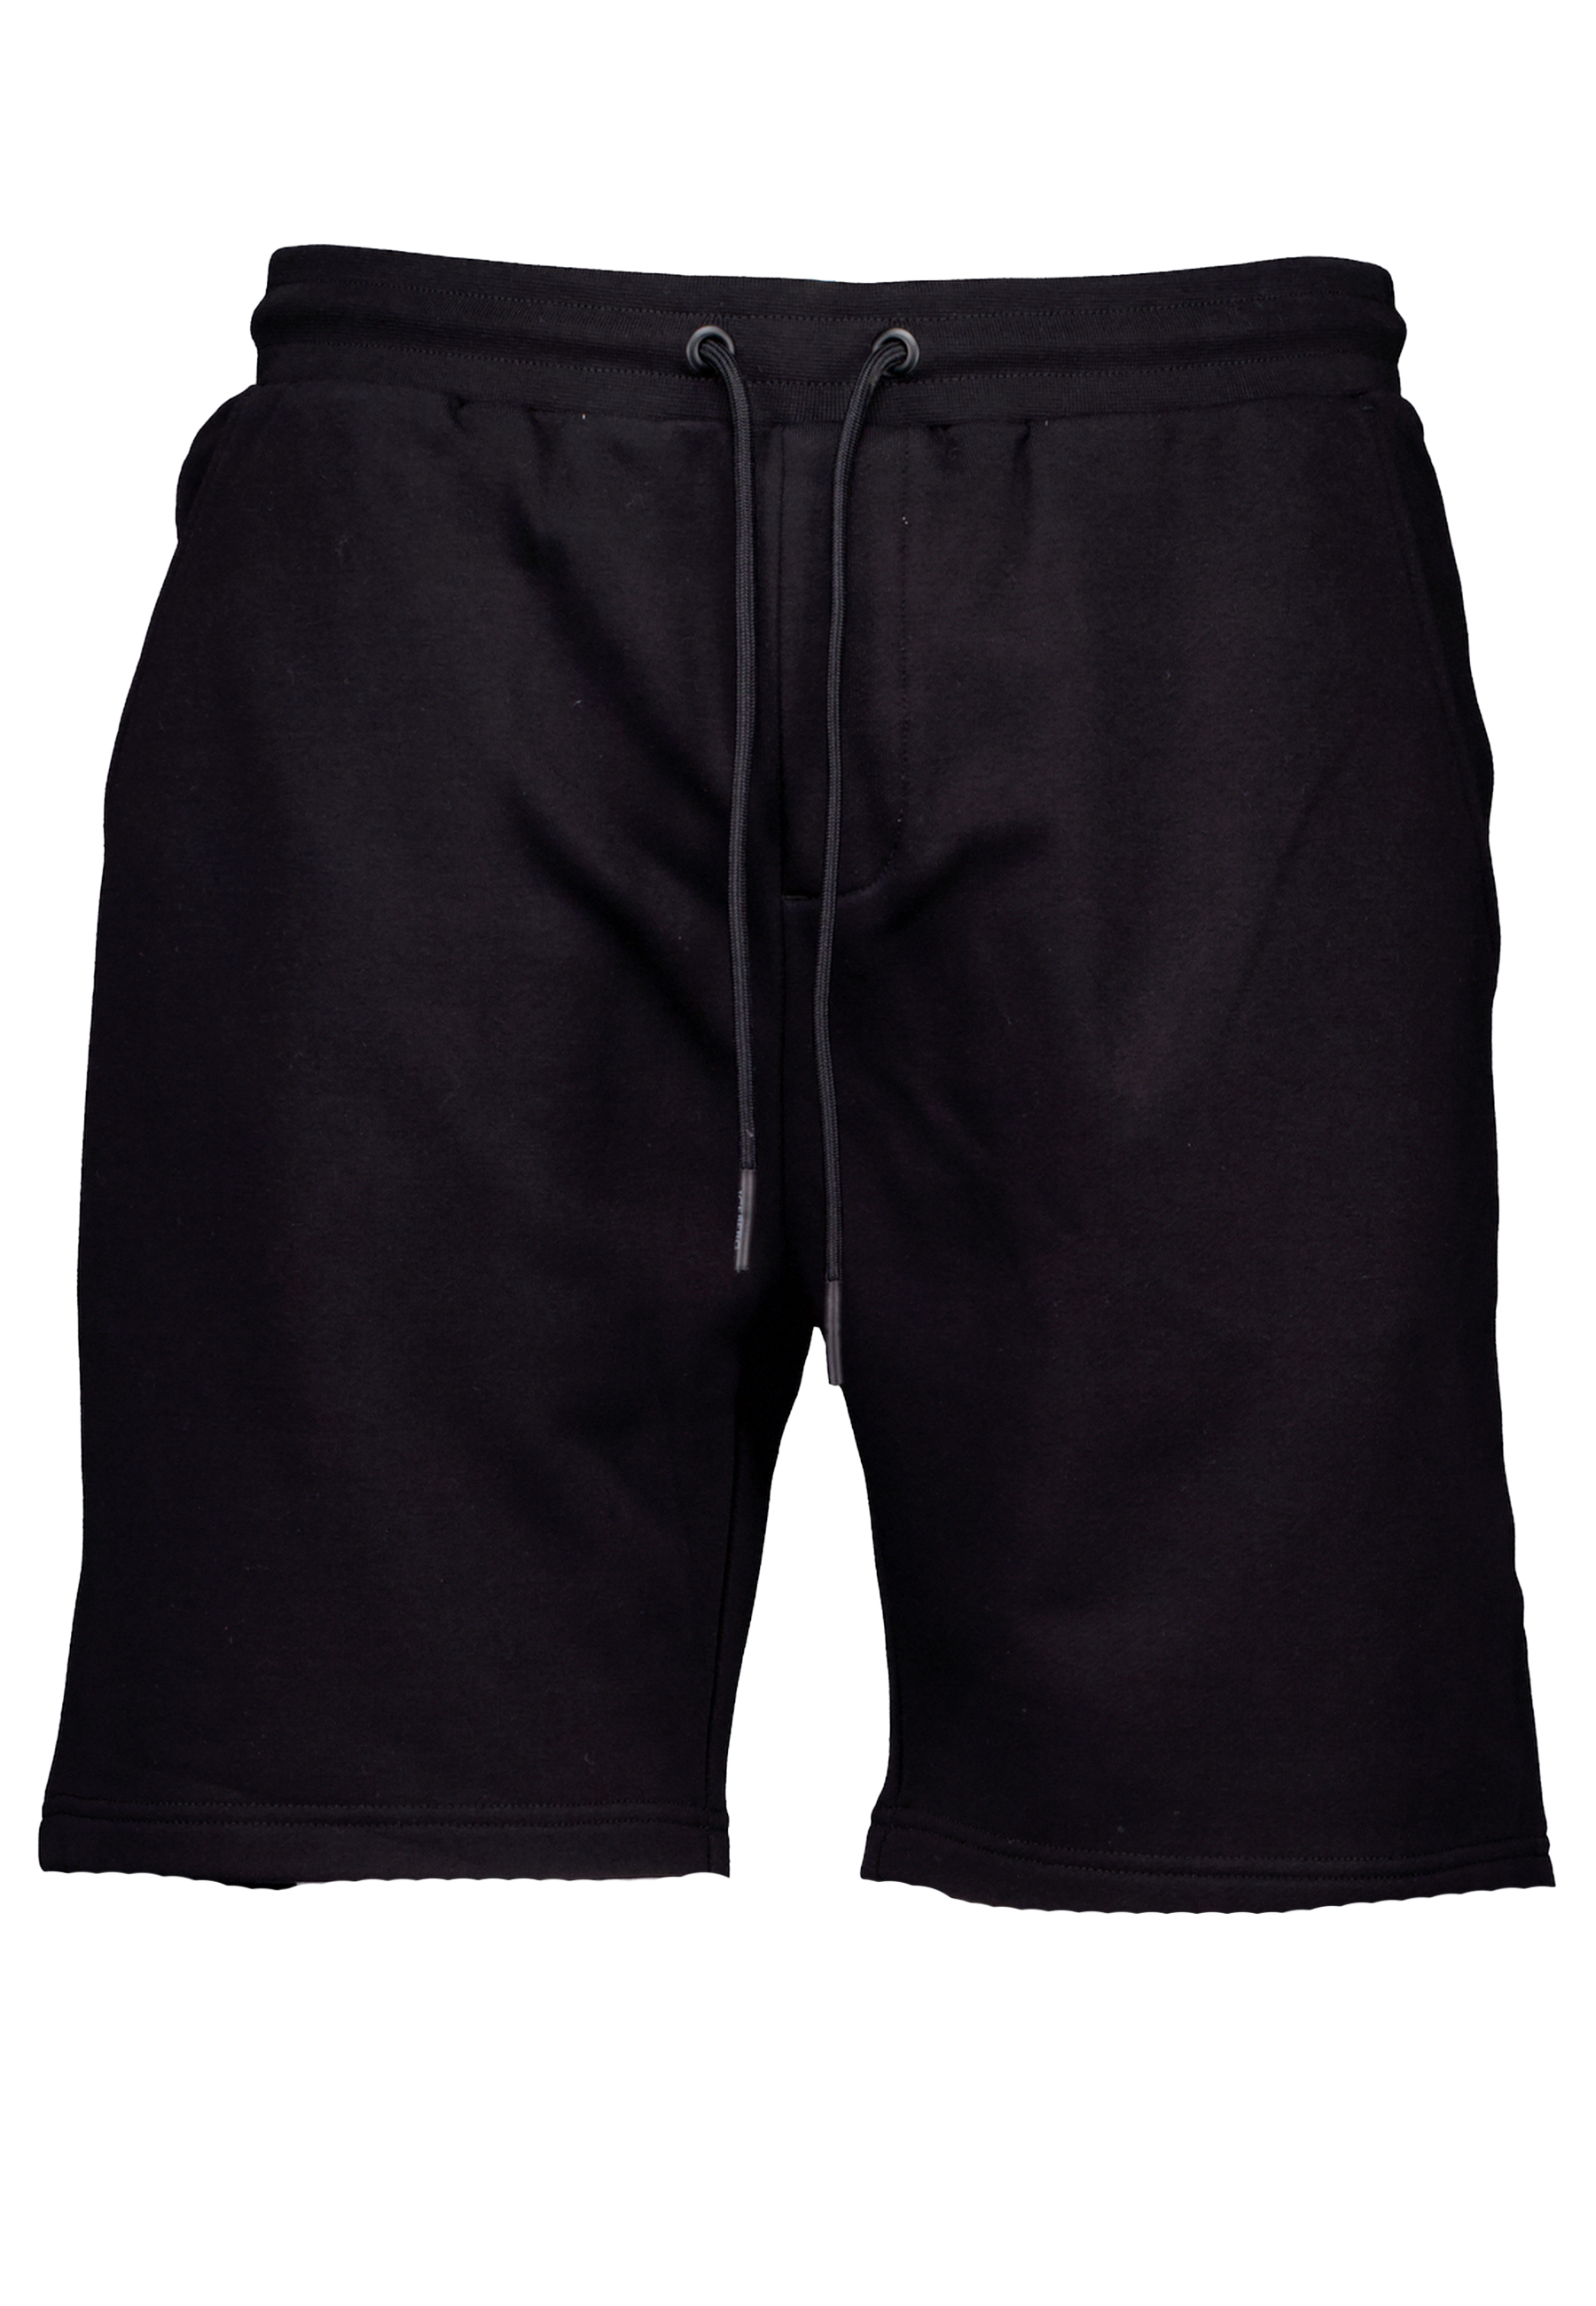 Broek Zwart shorts zwart